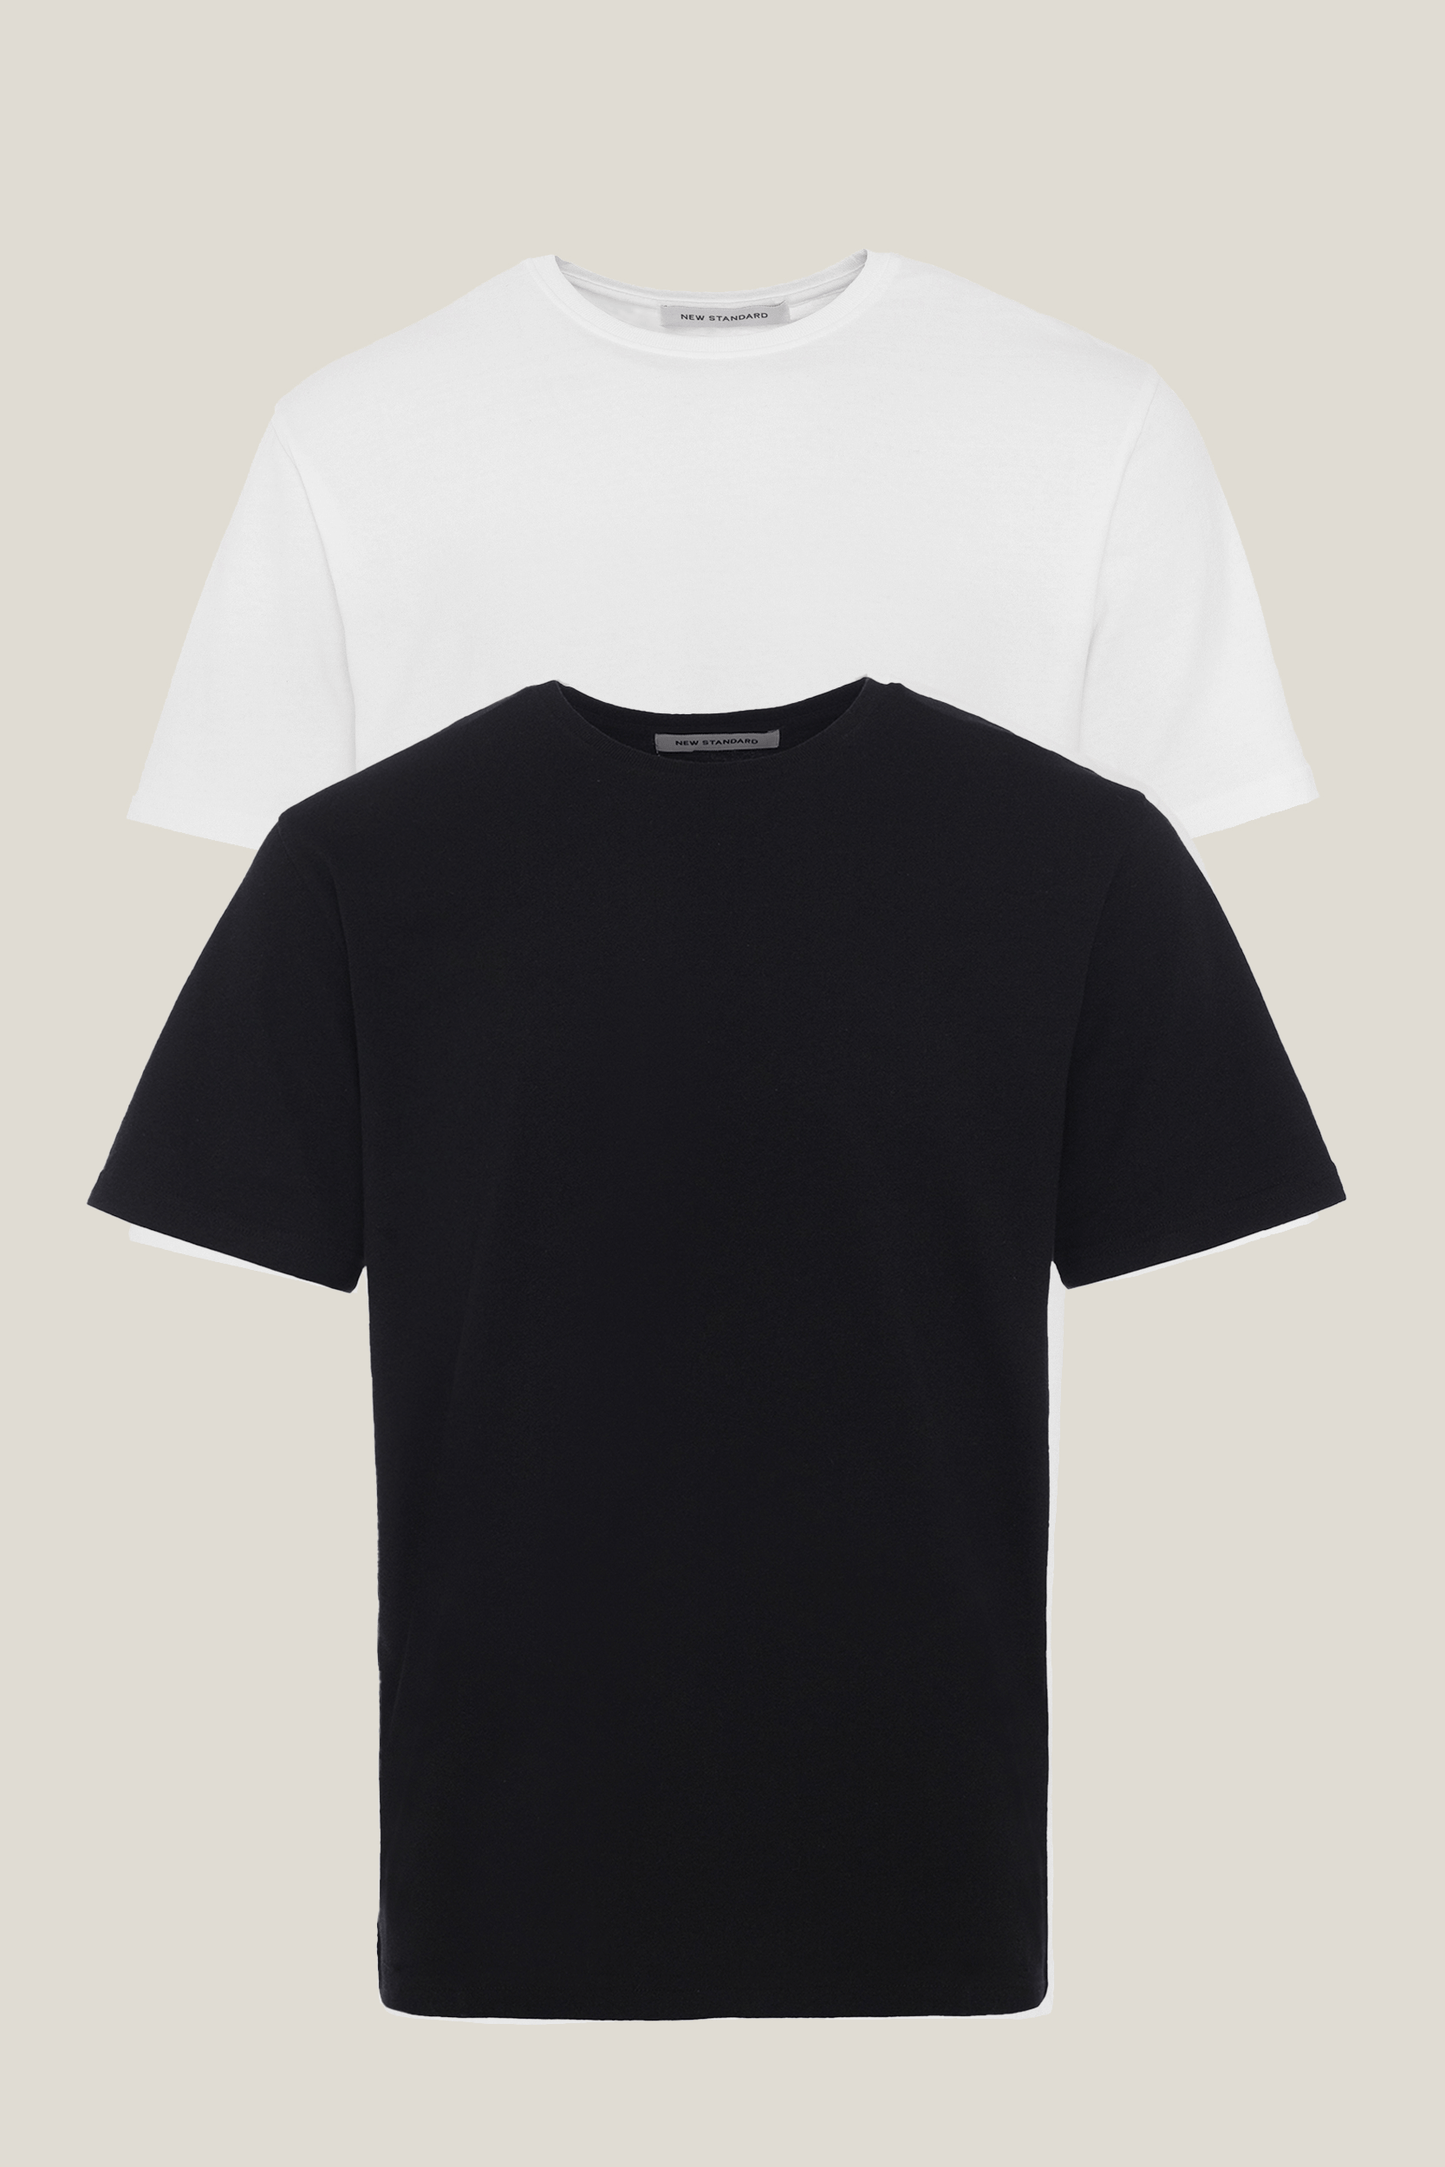 Men's t-shirt - Black and white (2-pack)